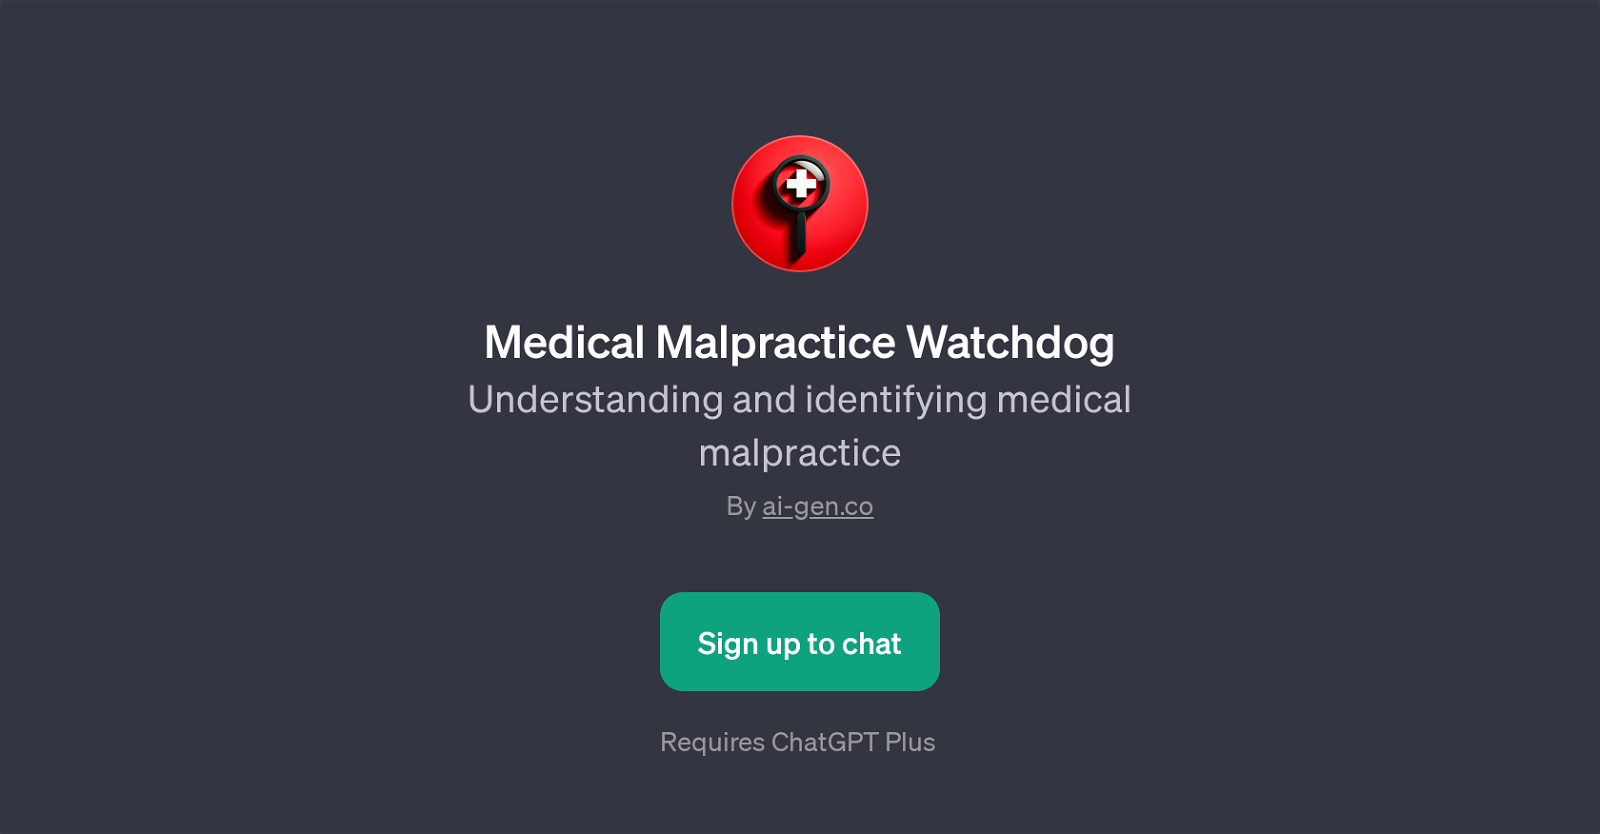 Medical Malpractice Watchdog website